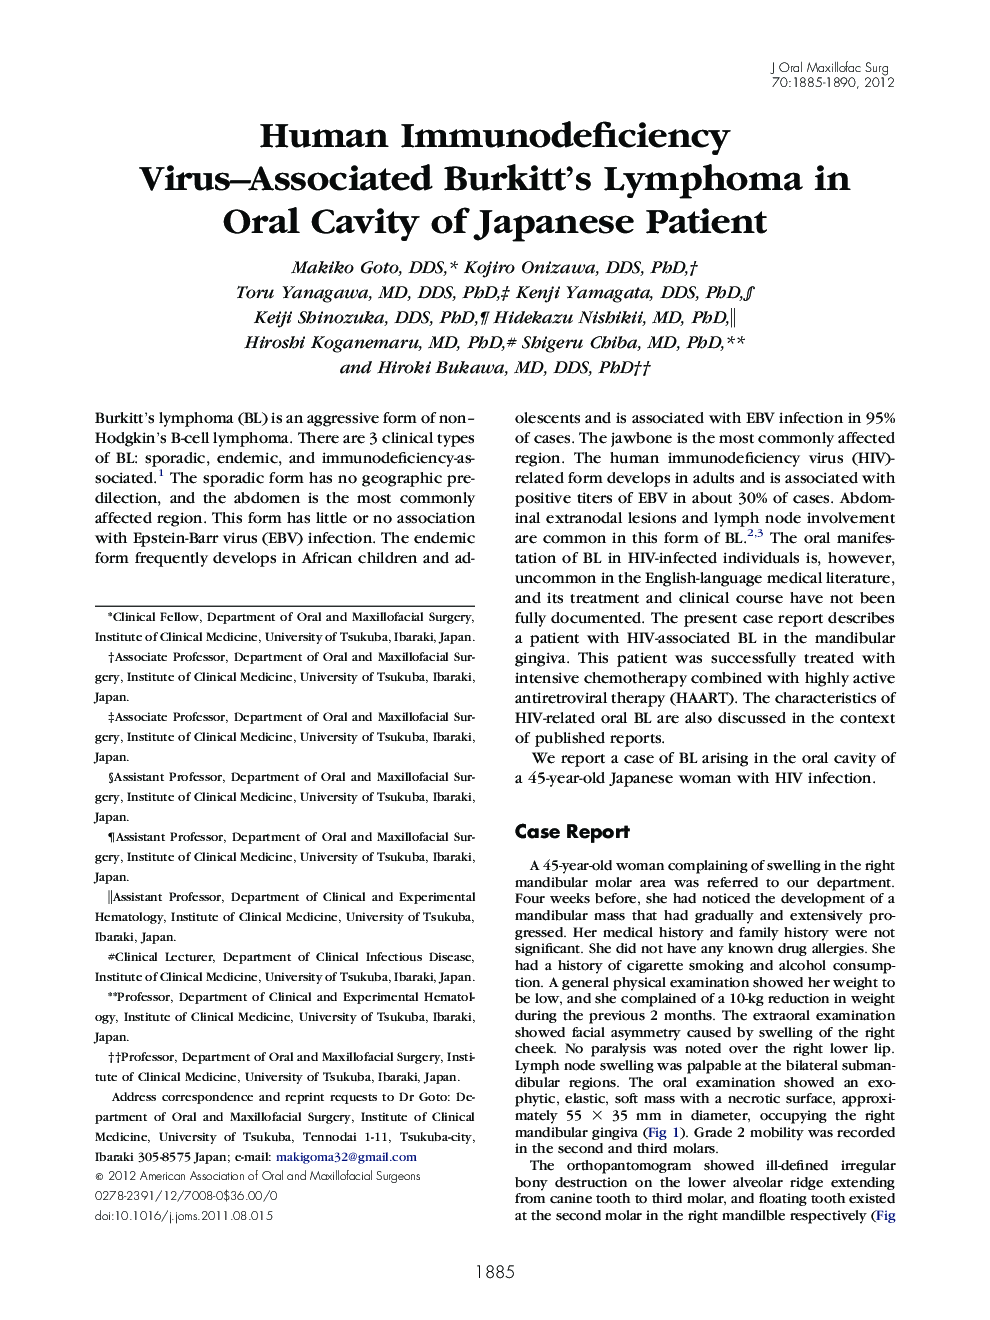 Human Immunodeficiency Virus-Associated Burkitt's Lymphoma in Oral Cavity of Japanese Patient